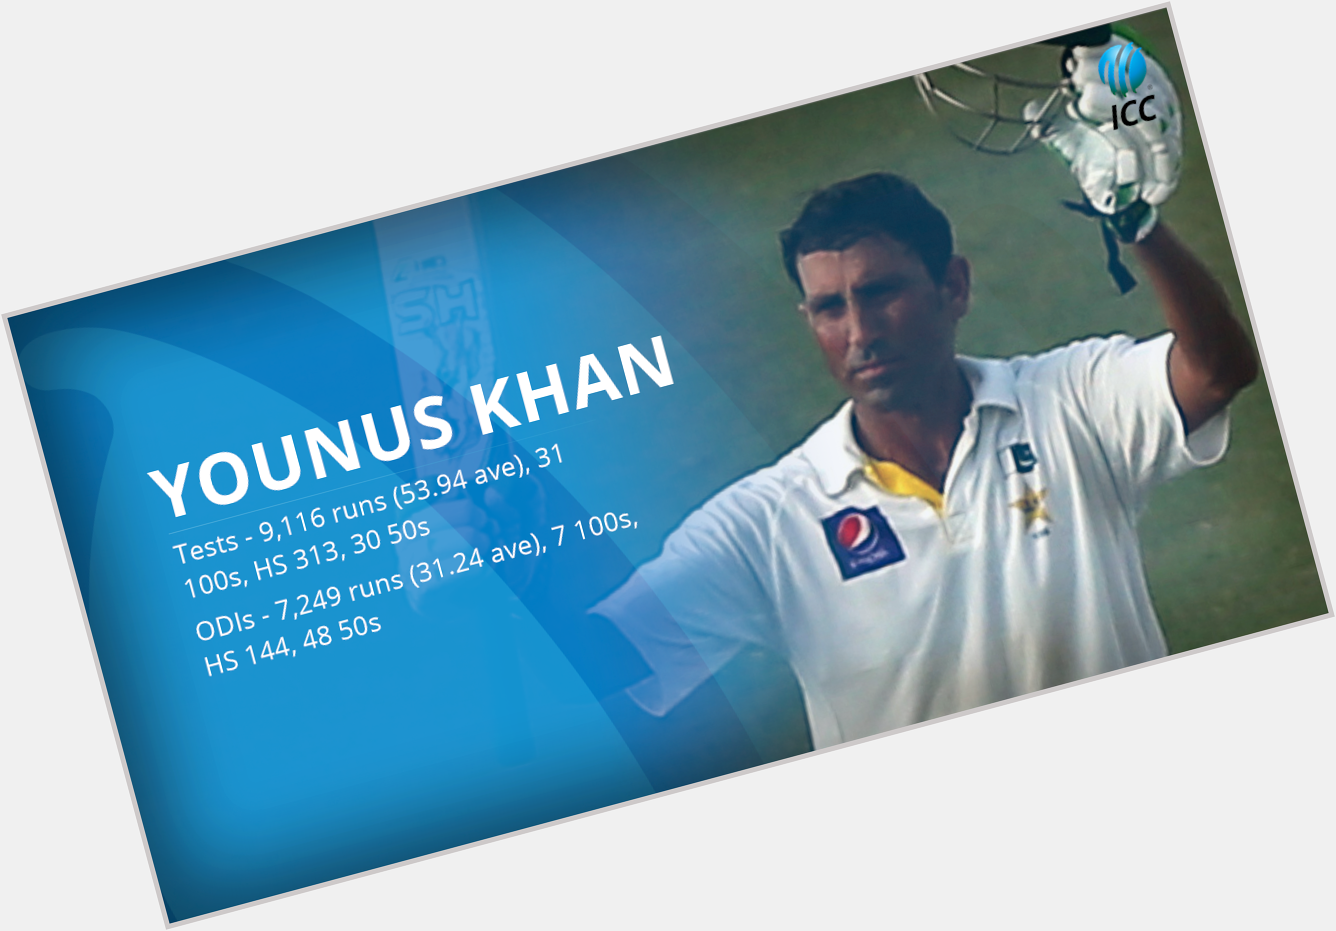 ICC: Happy Birthday to Pakistan\s leading runs scorer in Tests, Younus Khan! 